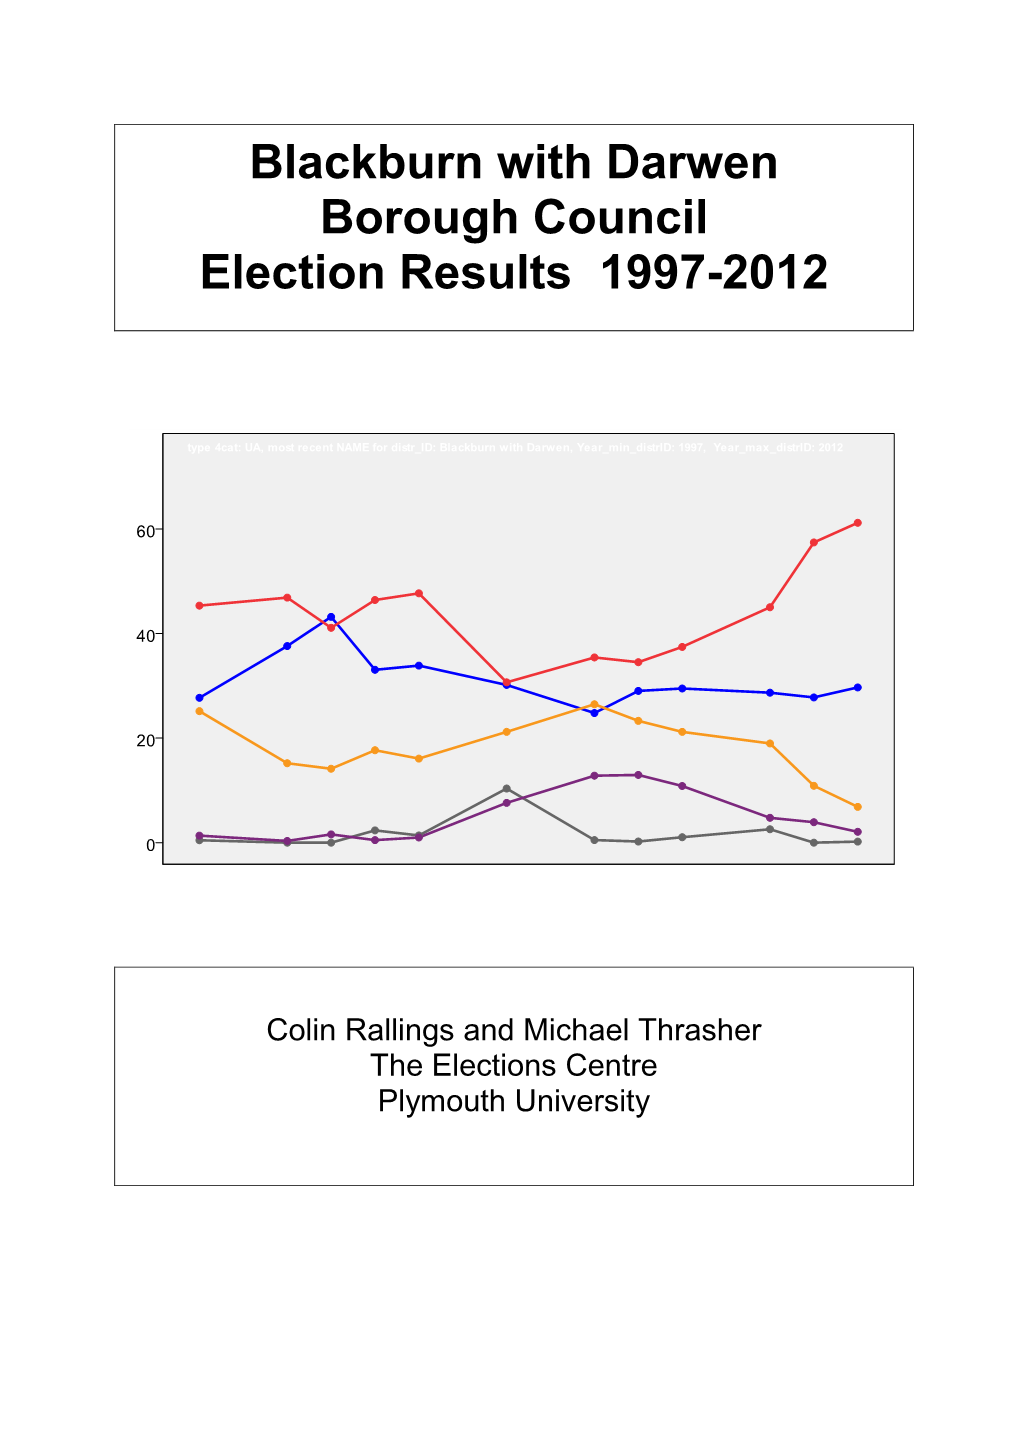 Blackburn with Darwen Borough Council Election Results 1997-2012